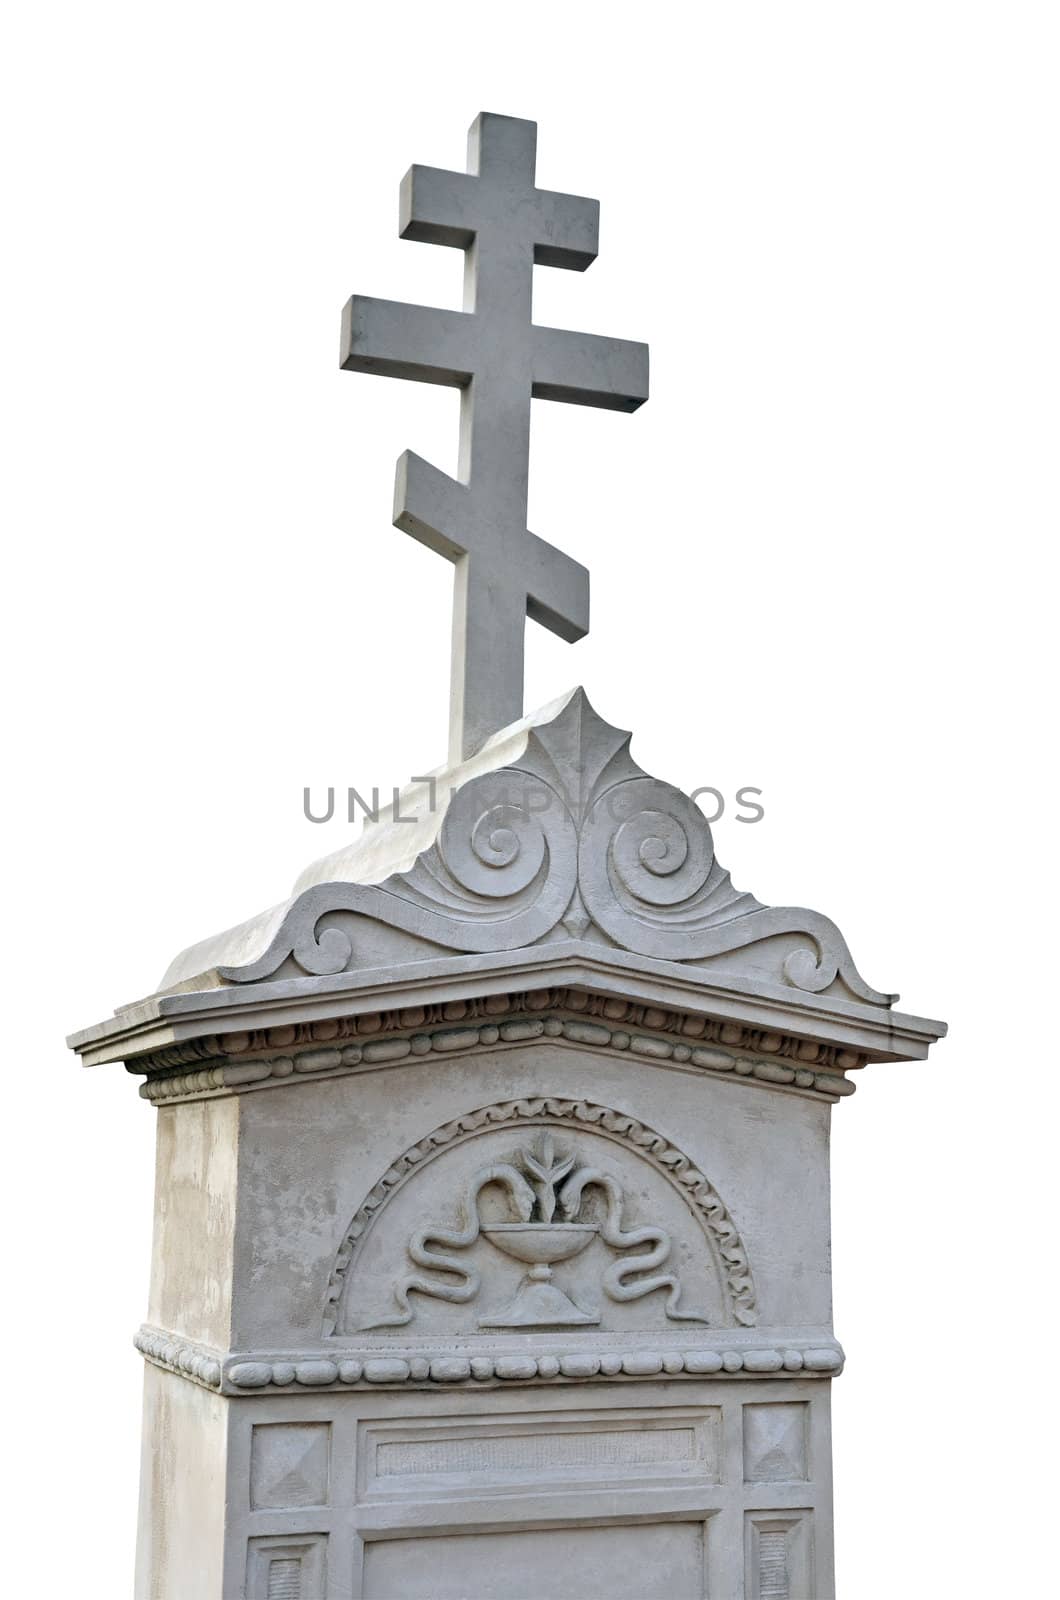 Orthodox cross by Vectorex